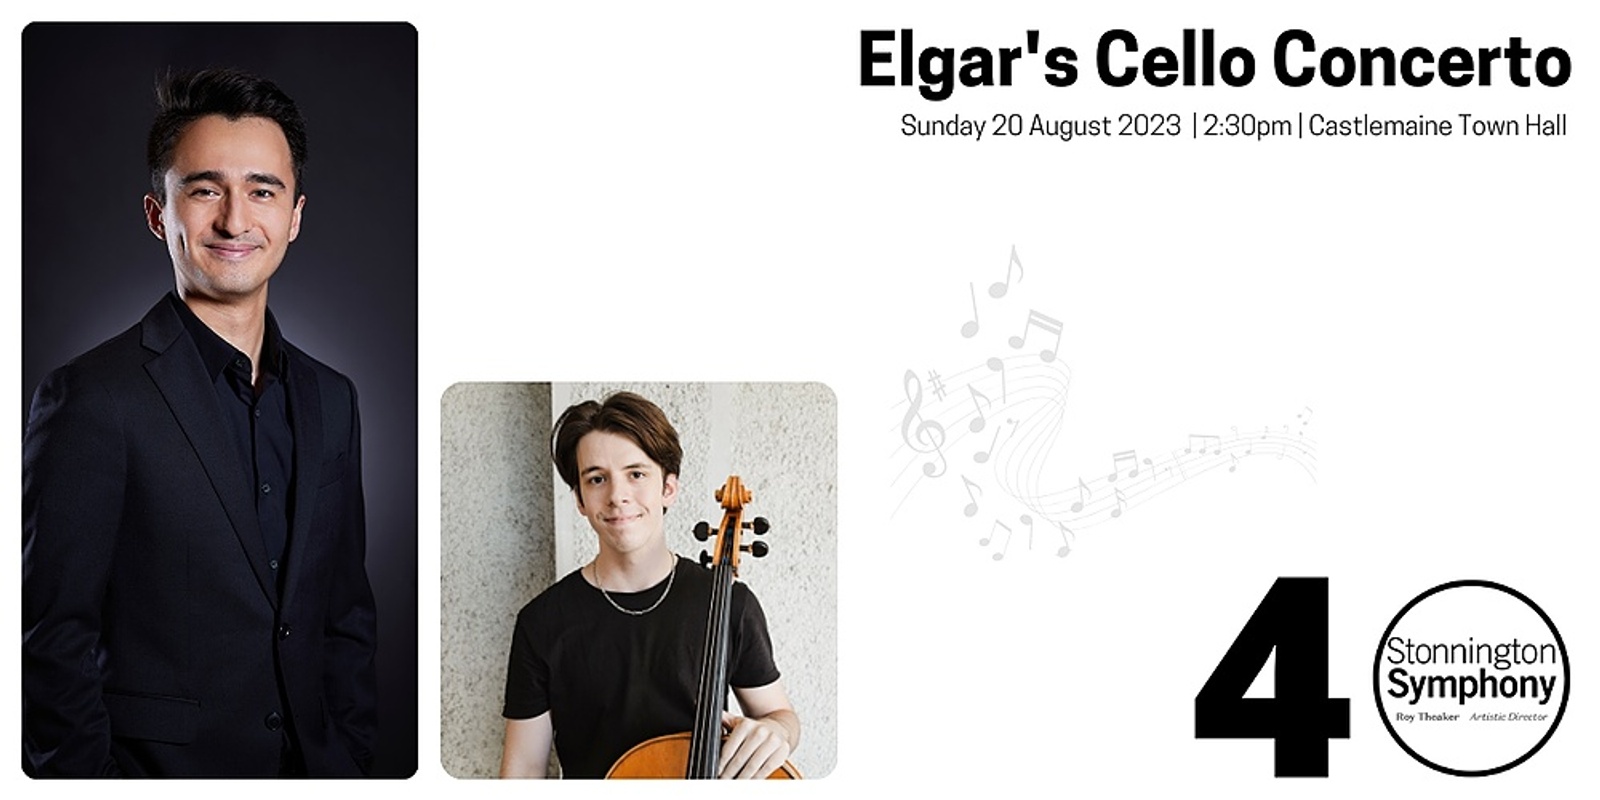 Elgar's Cello Concerto at Castlemaine Town Hall